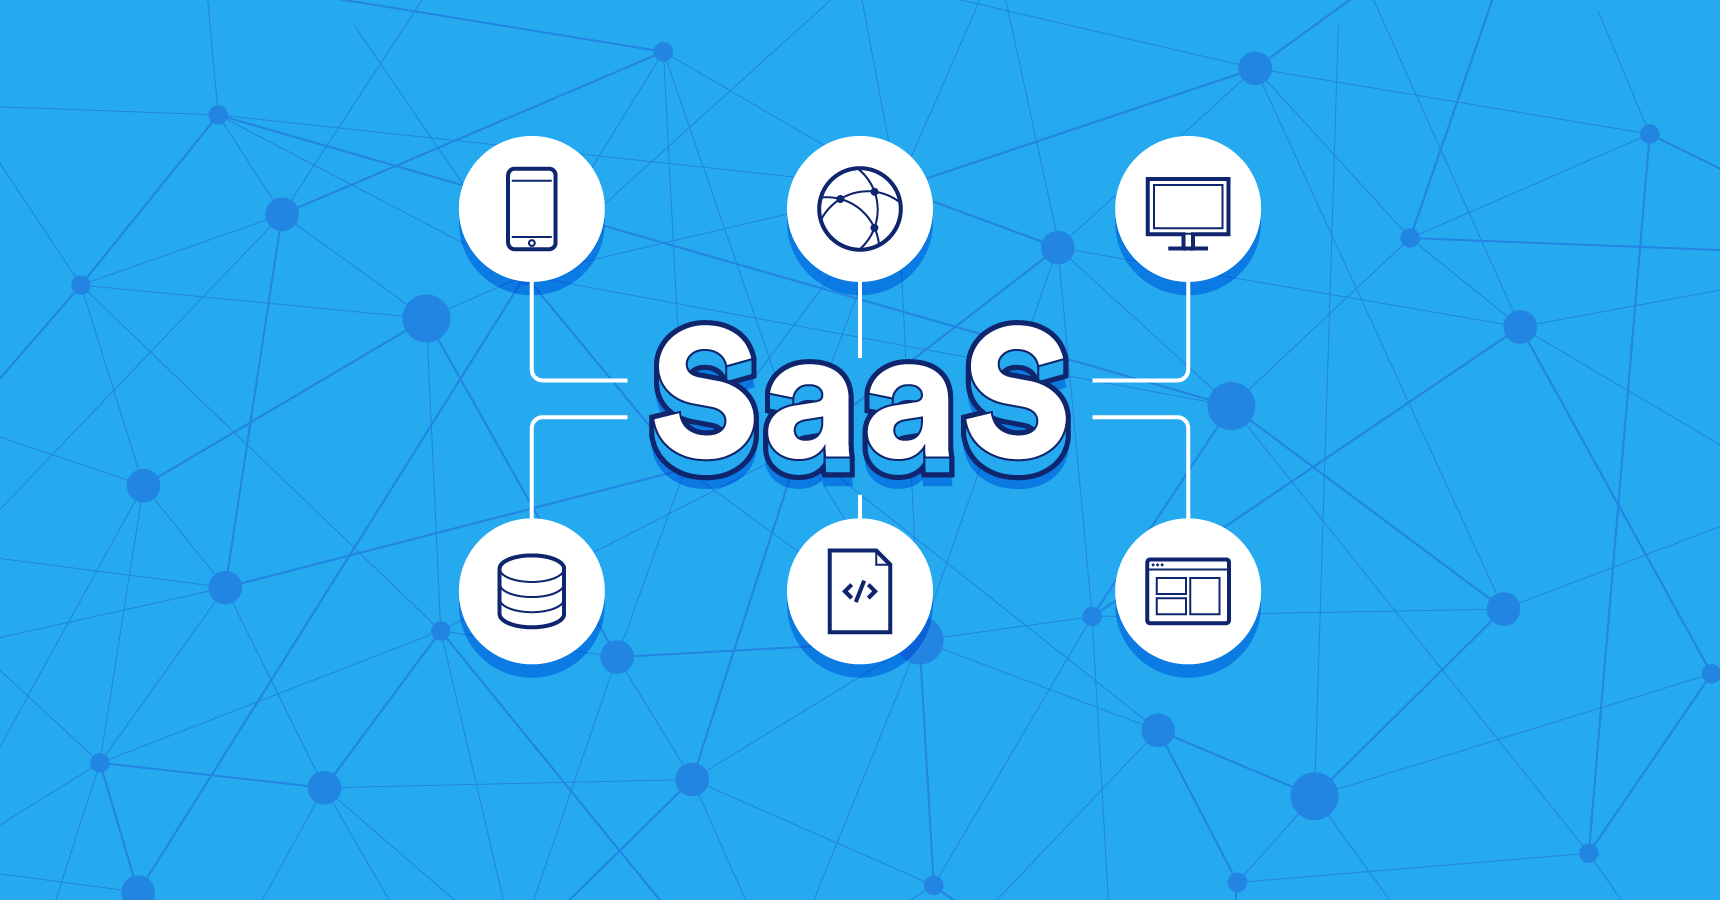 How to Start Planning SaaS Design?